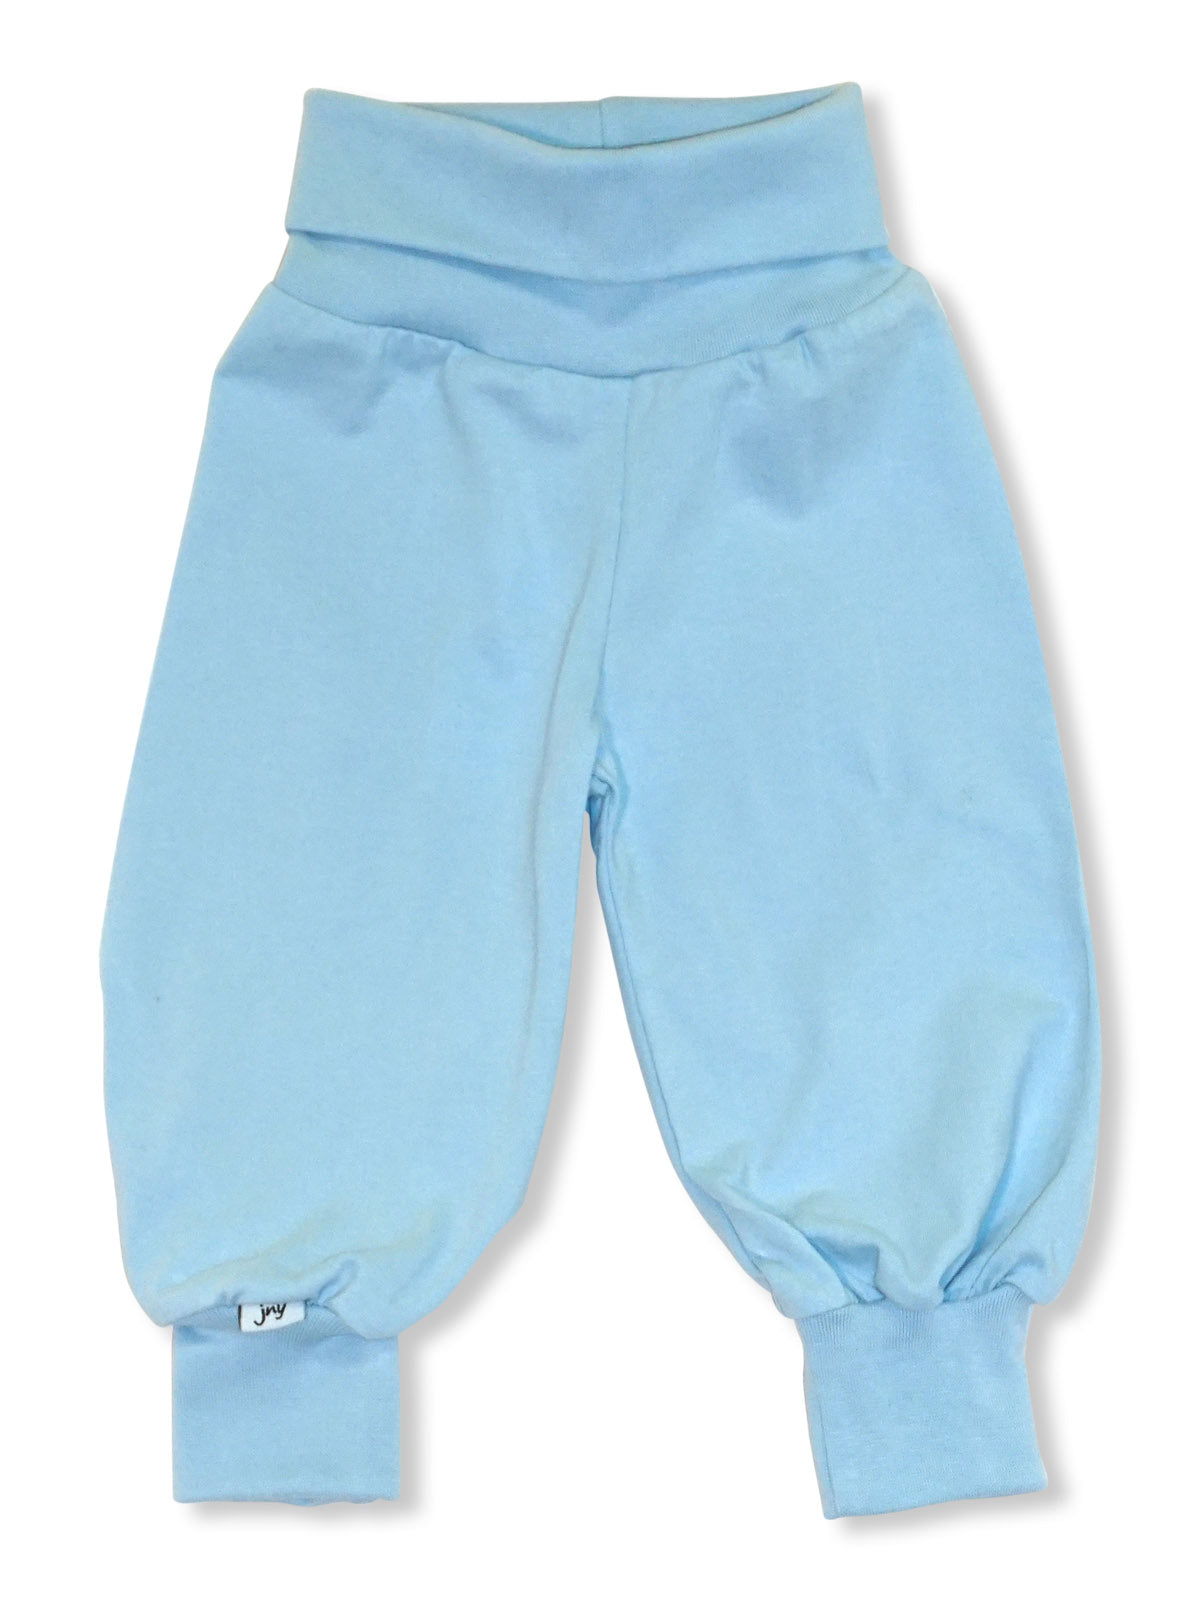 JNY - Basics - Comfy Pants - Light Blue